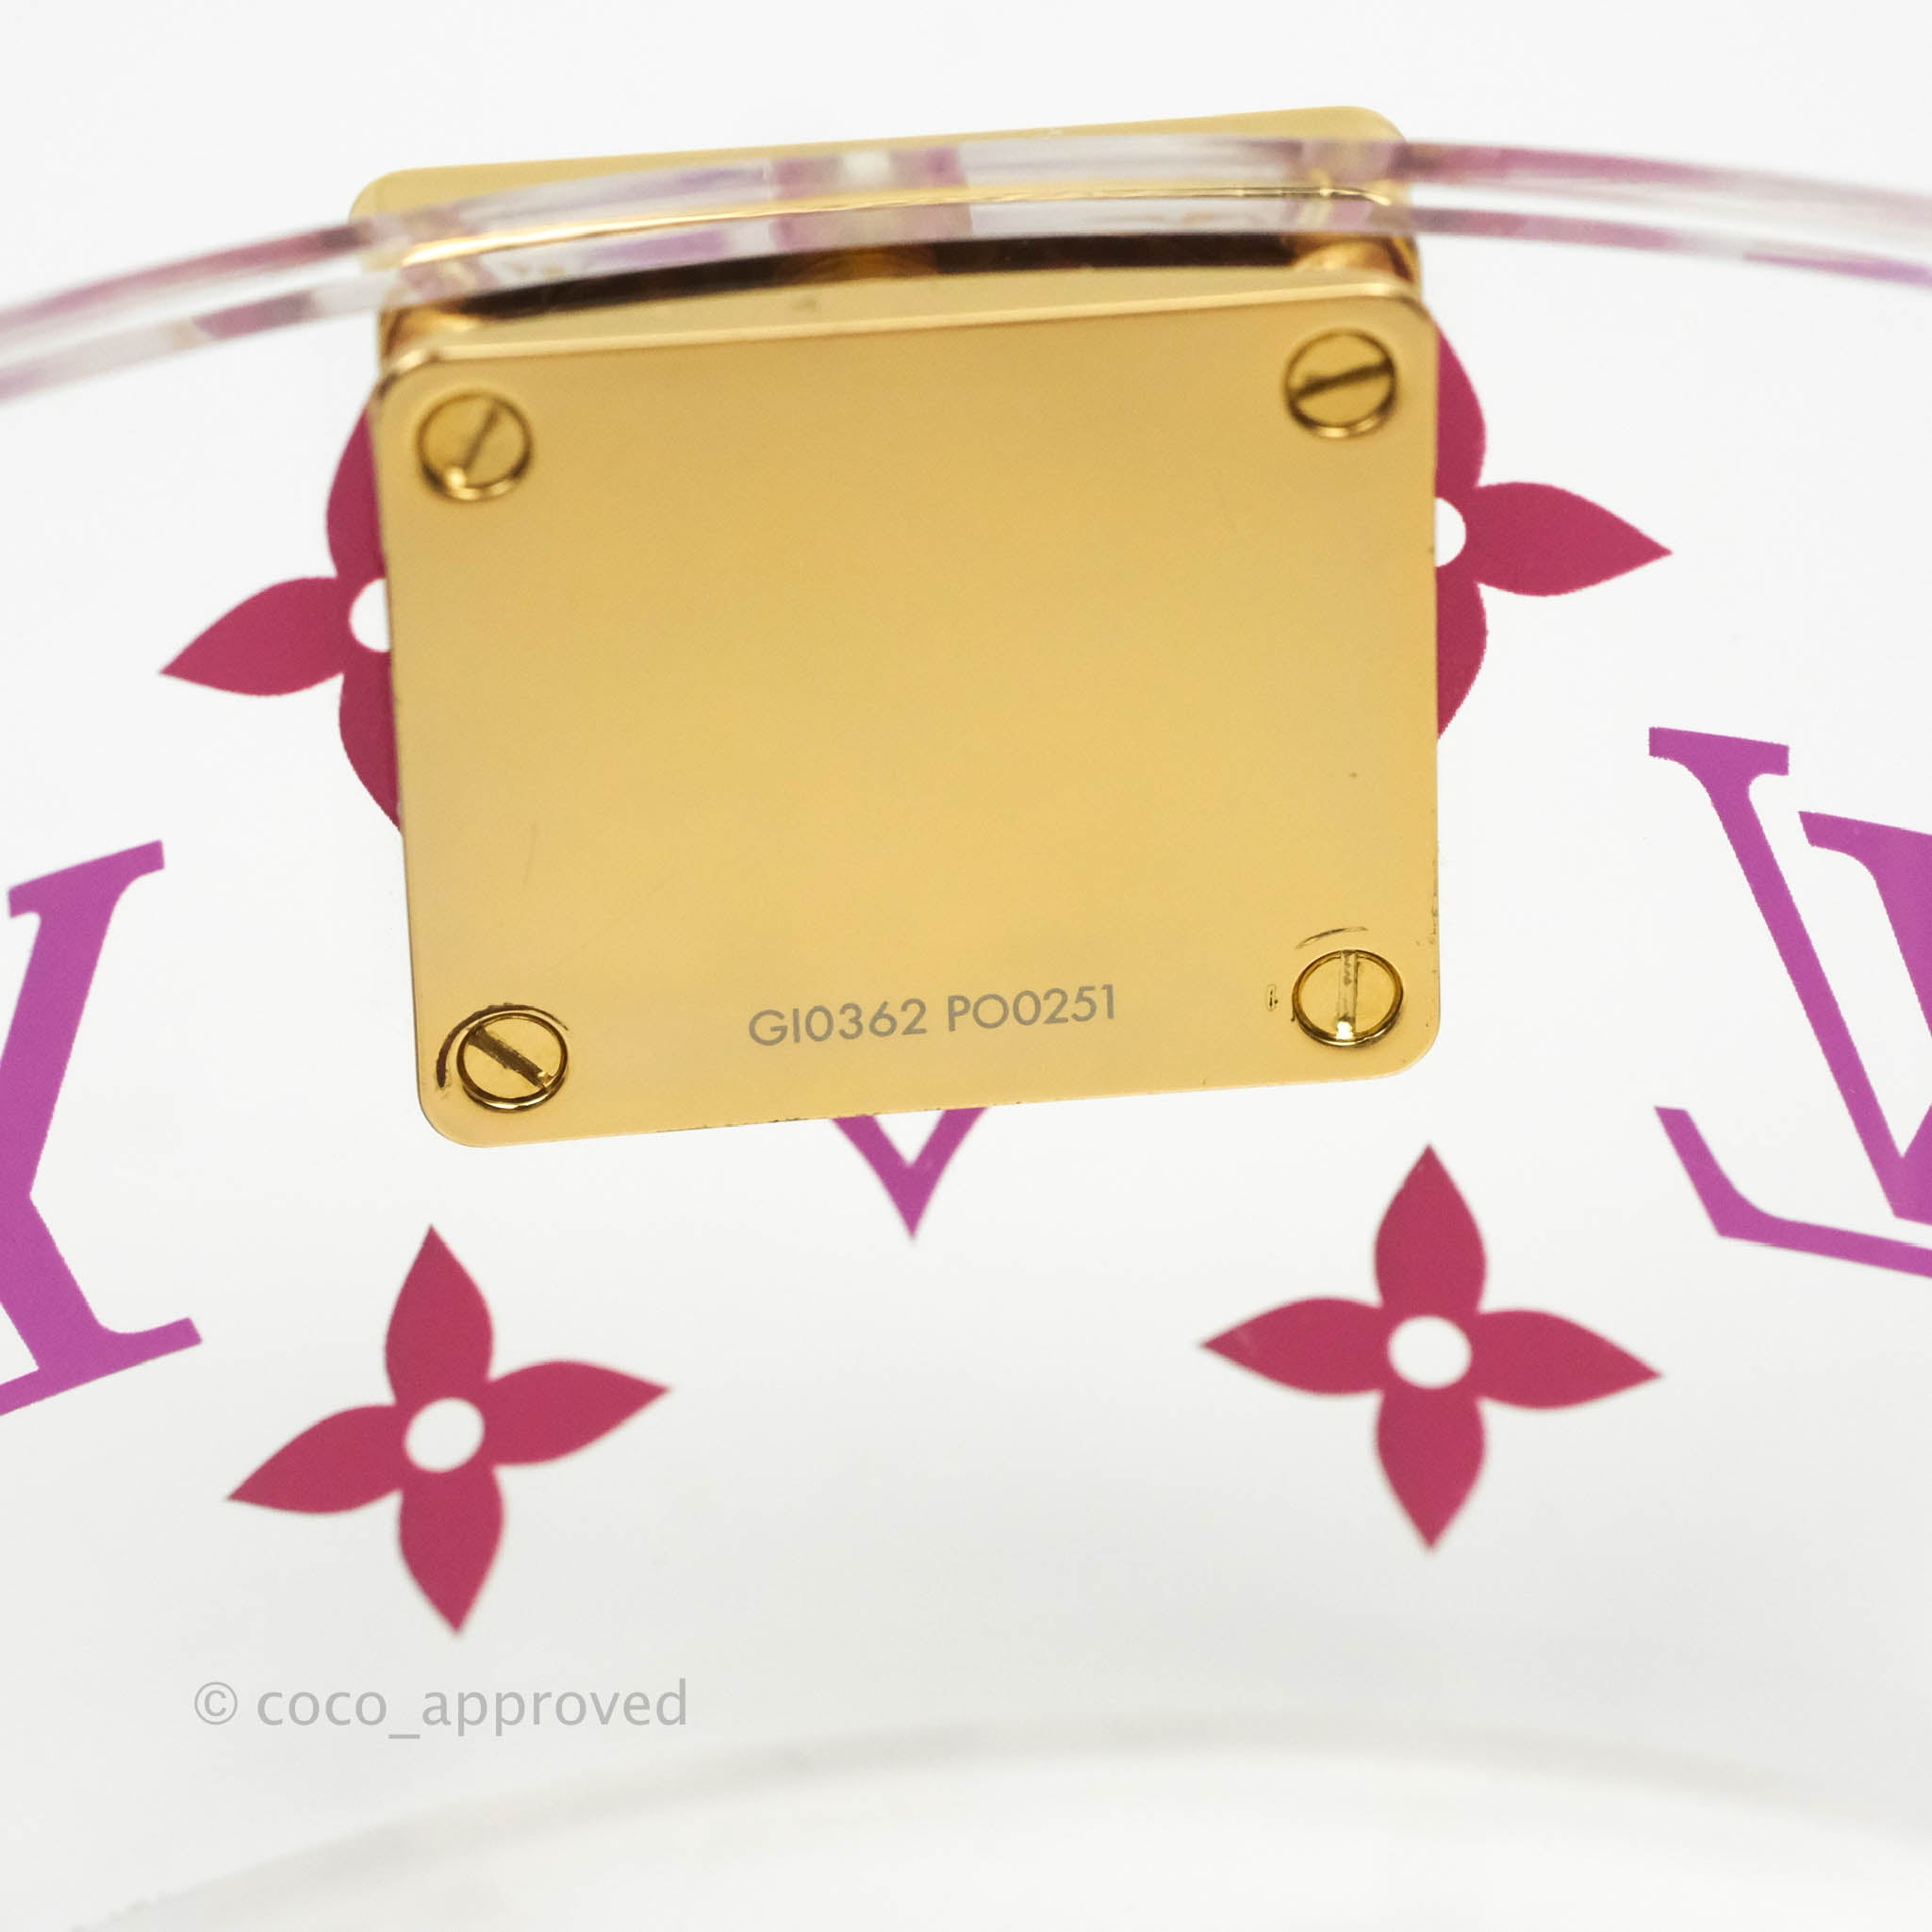 Louis Vuitton Clear Pink Monogram Scott Box DM for Price #louis  #louisvuitton